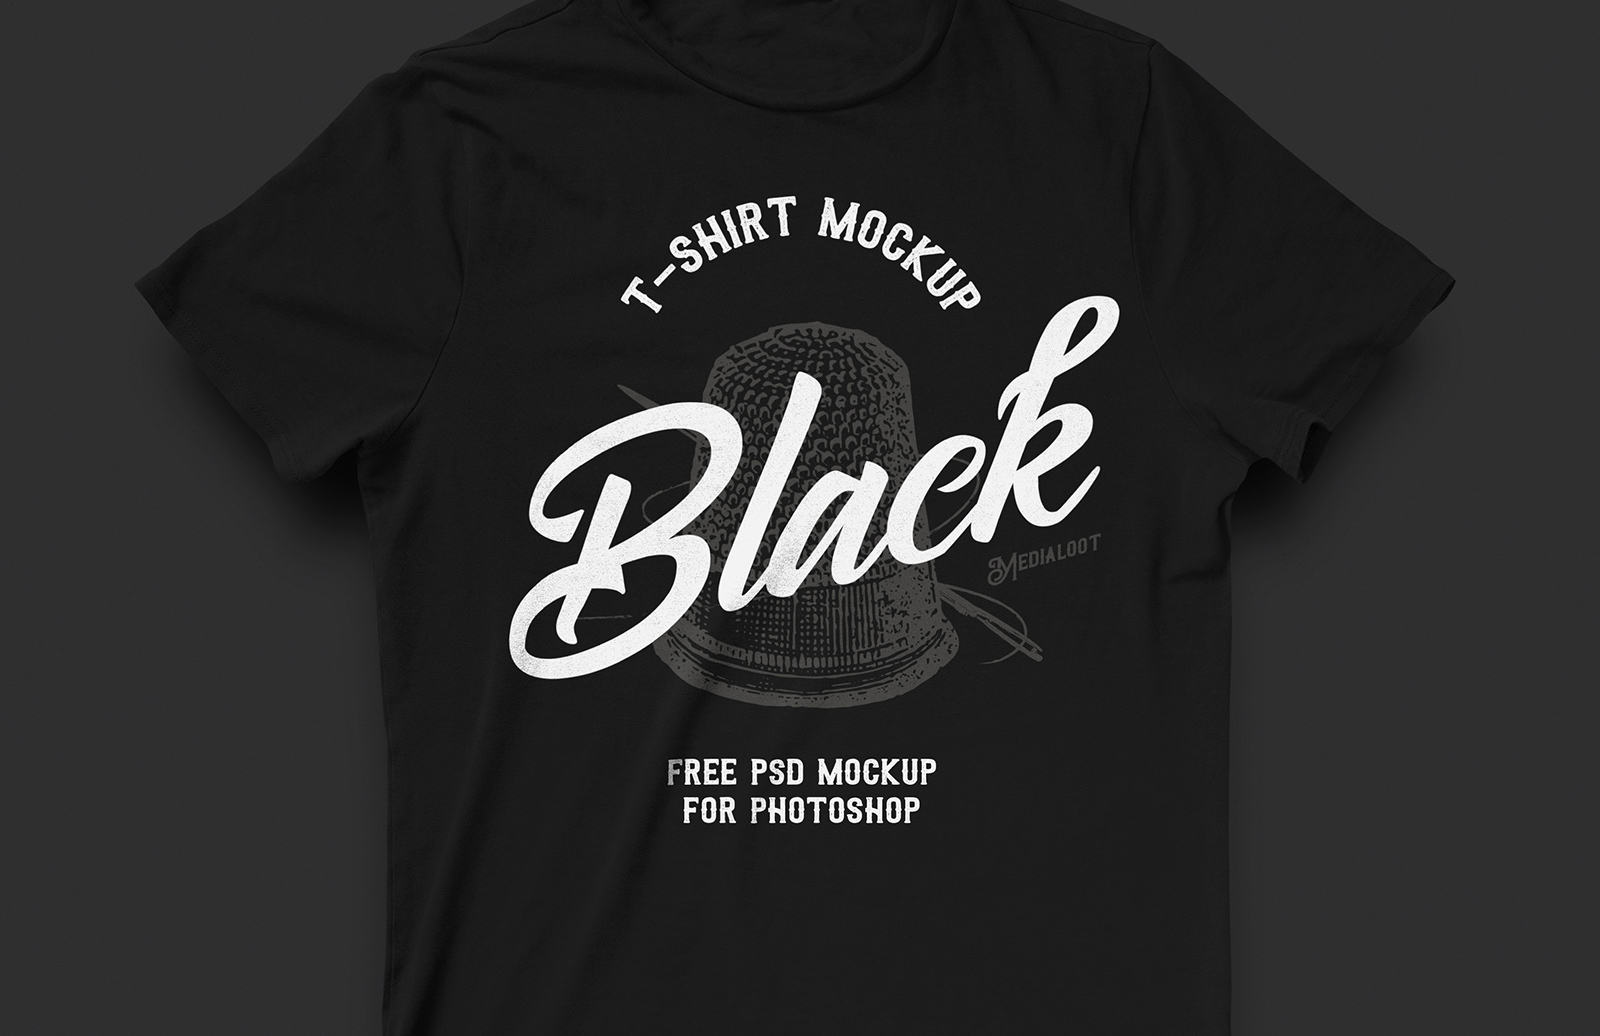 Download Free Black T Shirt Mockup Medialoot PSD Mockup Templates